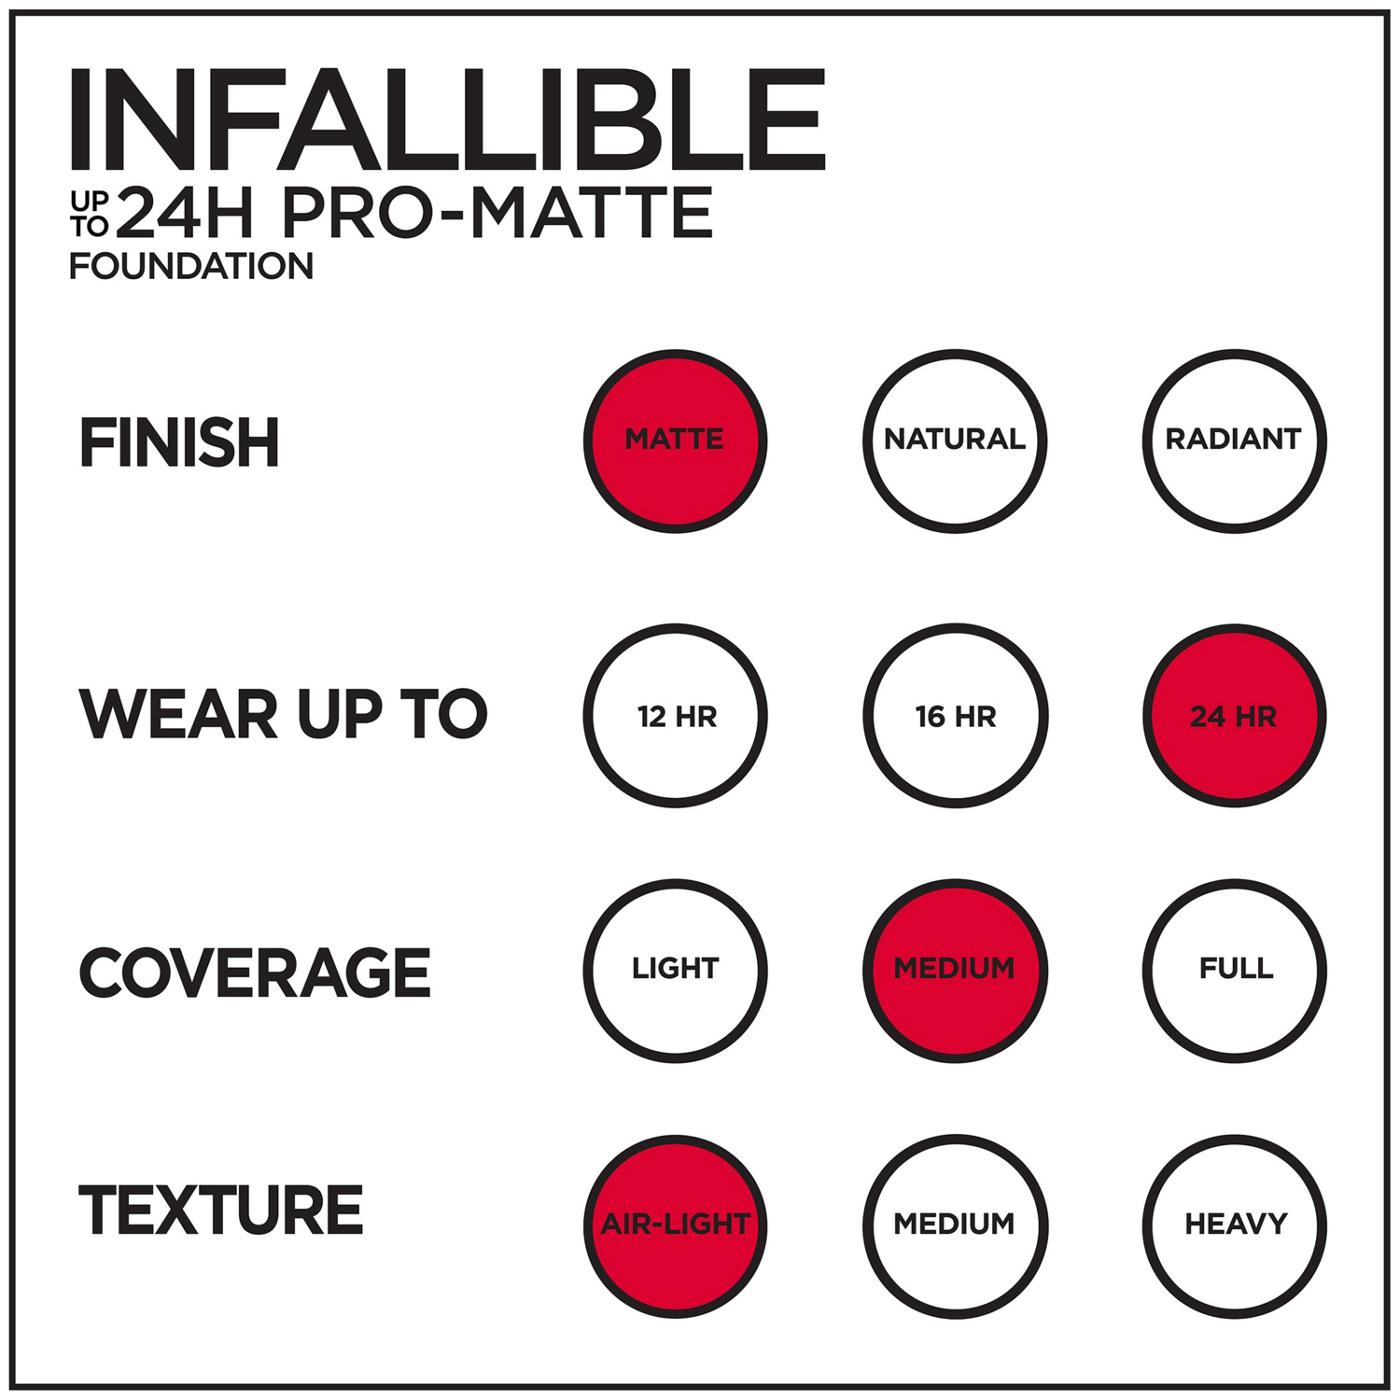 L'Oréal Paris Infallible Infallible Pro-Matte Foundation, Up To 24 HR Matte Finish 102 Shell Beige; image 3 of 5